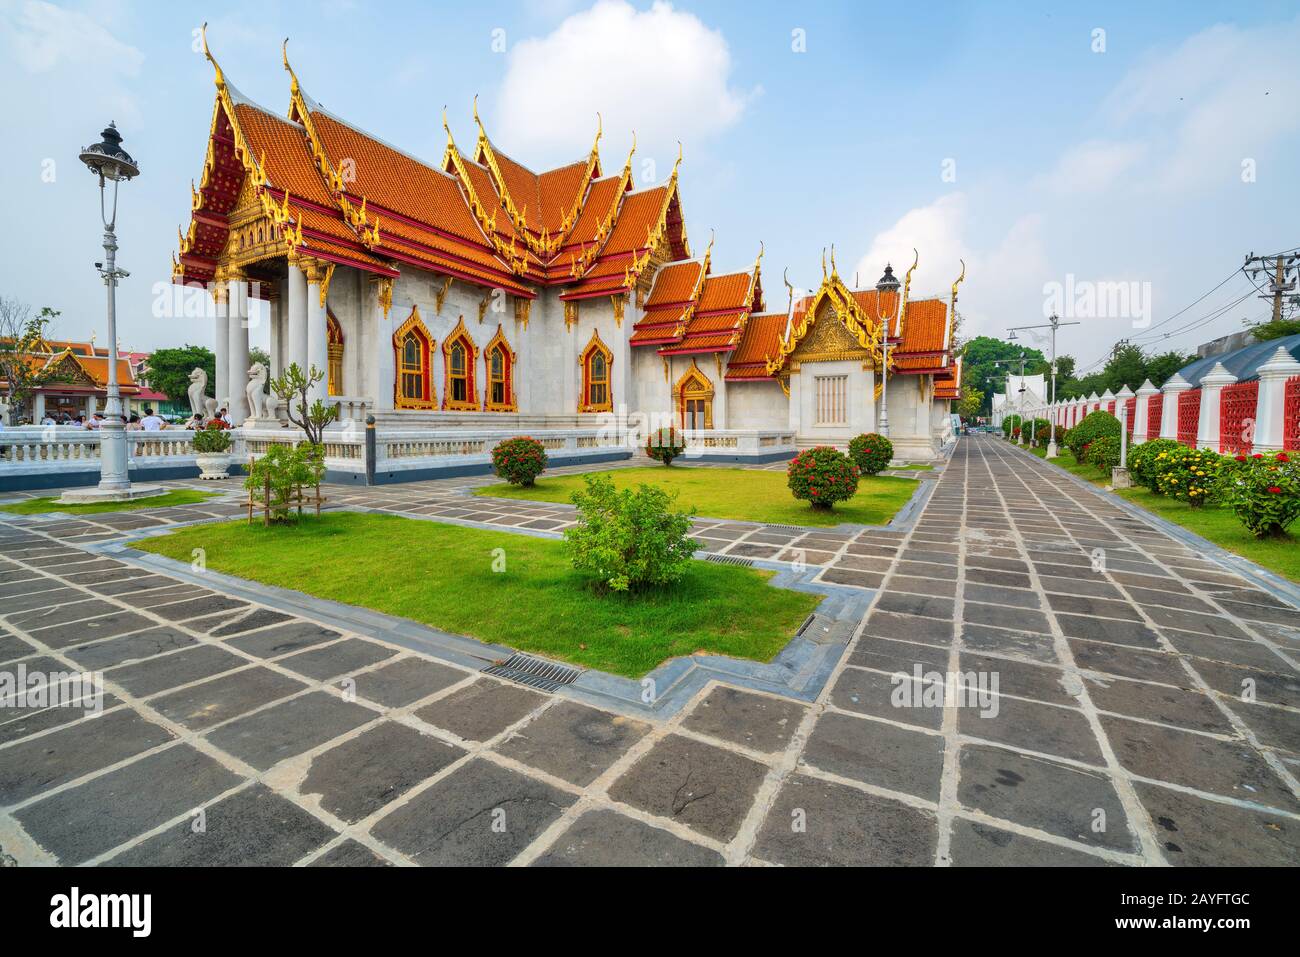 Bangkok, Wat Benchamabophit Dusitvanaram Rajawarawiharn - Marble Temple. A major attraction of Bangkok, Thailand Stock Photo